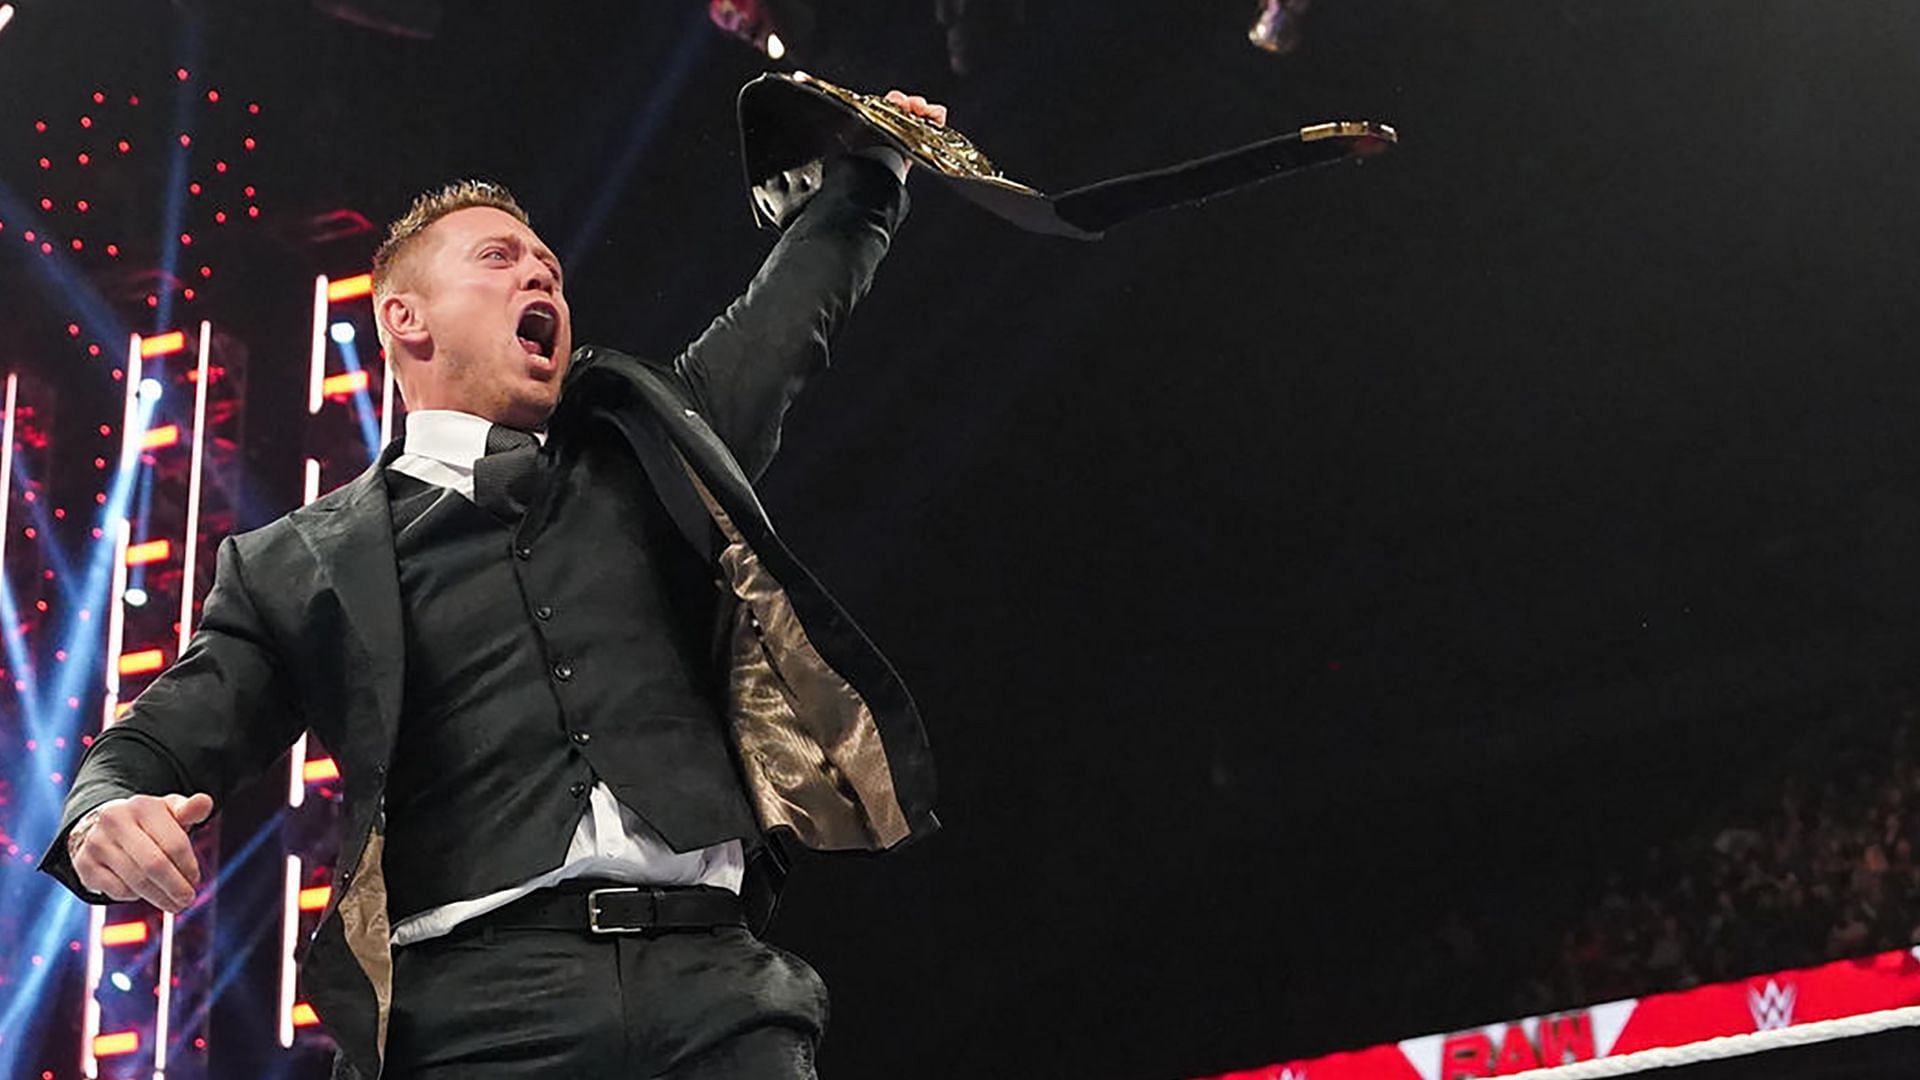 The Miz raises the WWE Intercontinental Championship in the air